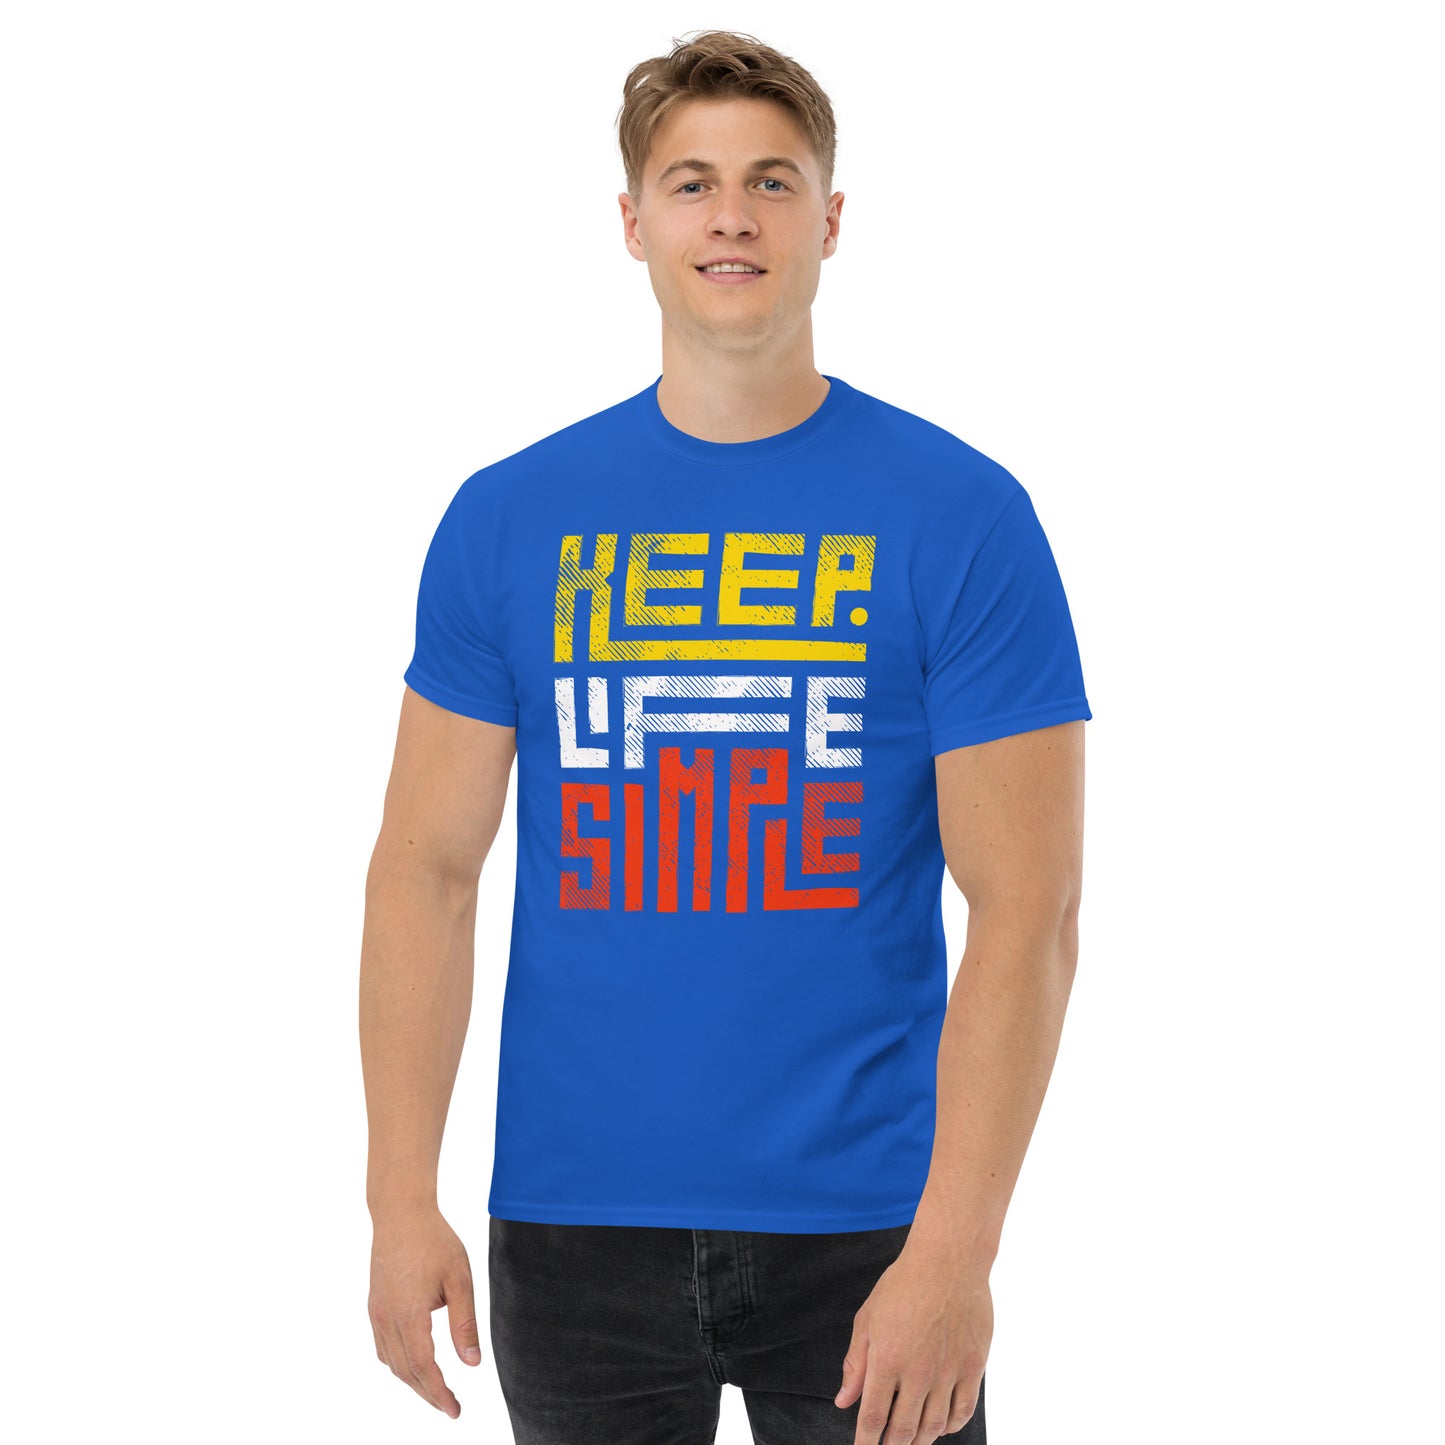 Keep Life Simple T-Shirt